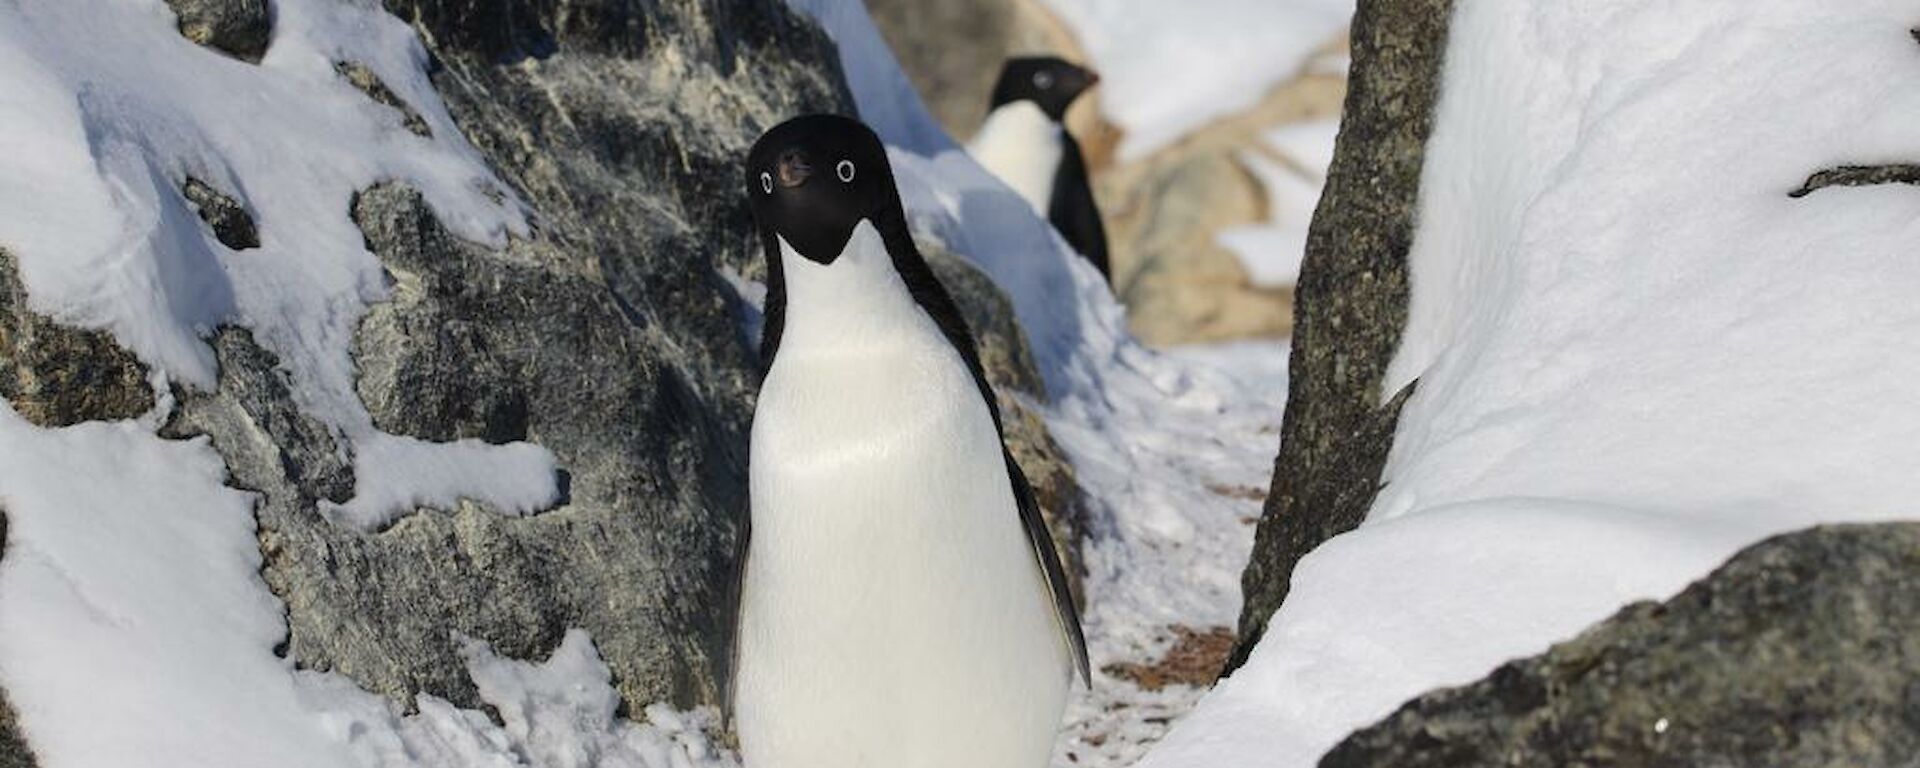 Adélie penguin waddling between some rocks and snow